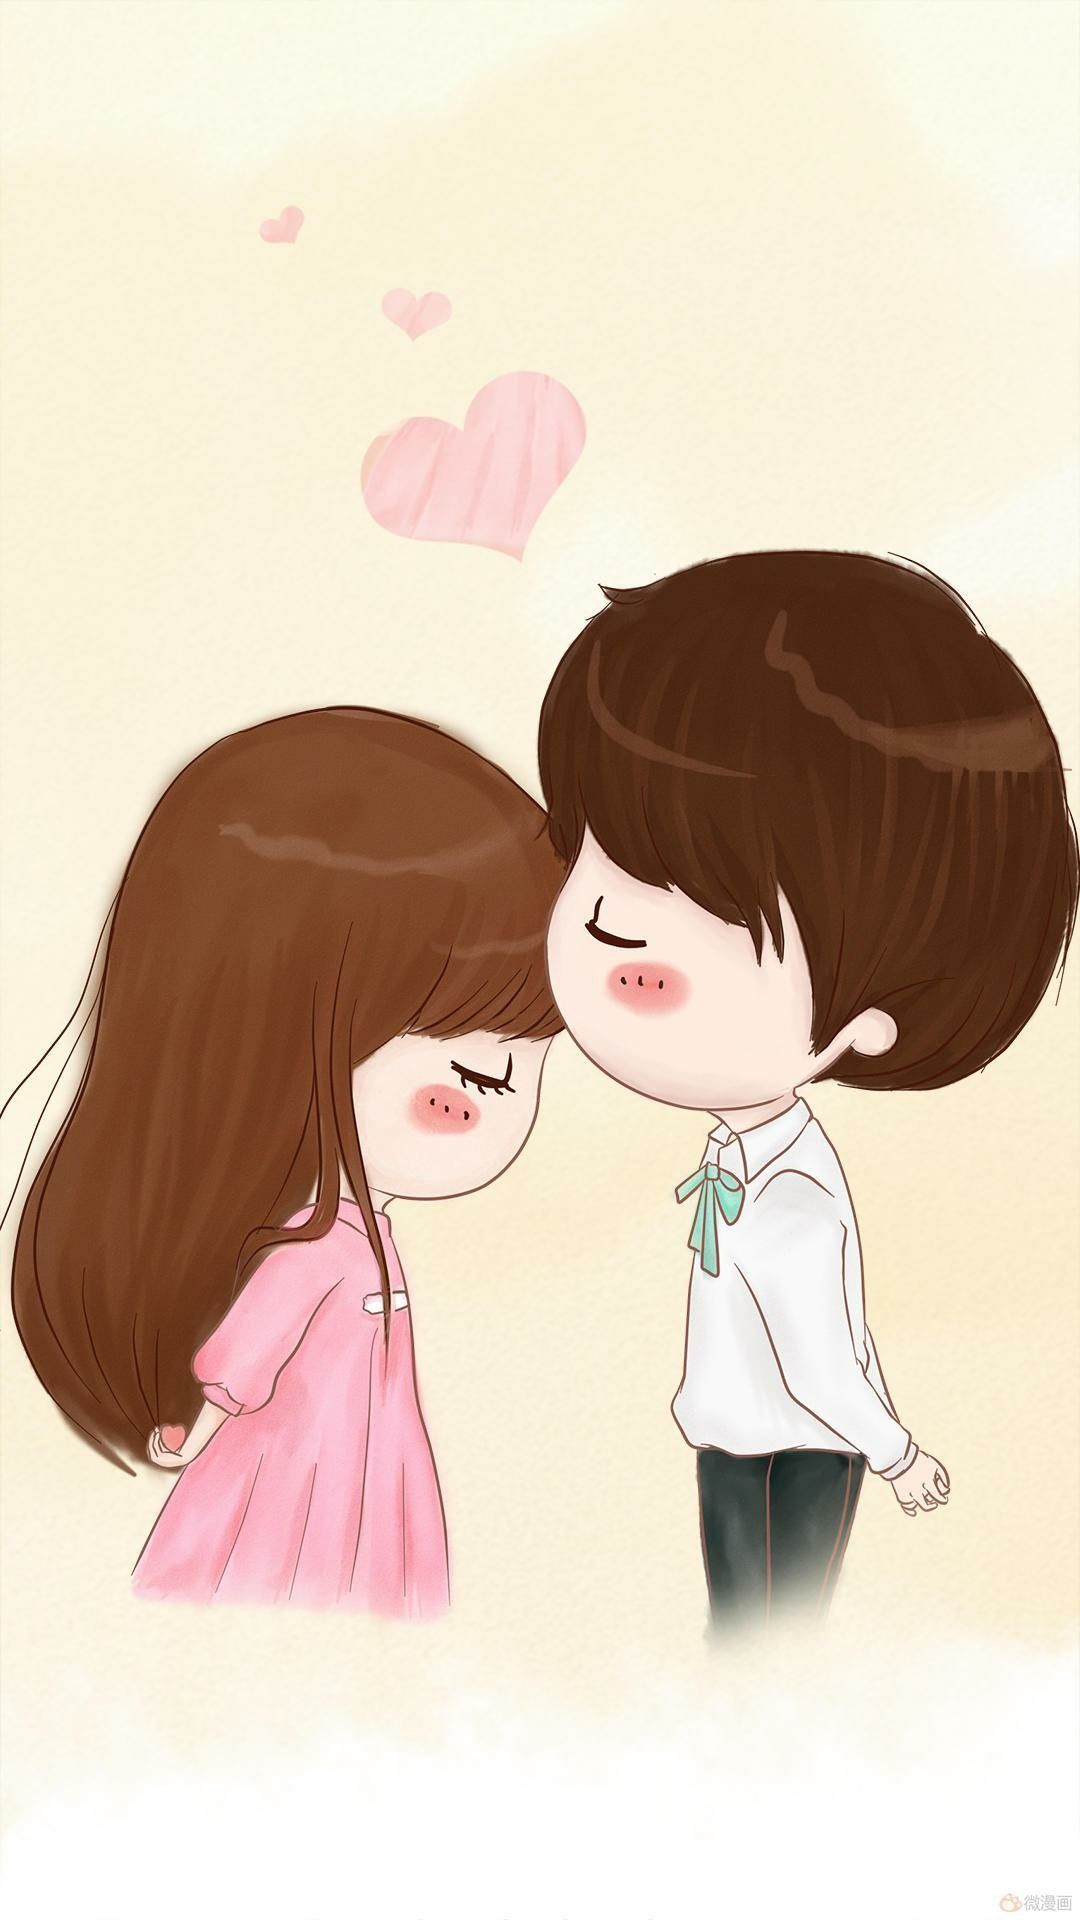 Cute Cartoon Love Couple - 1080x1920 Wallpaper 